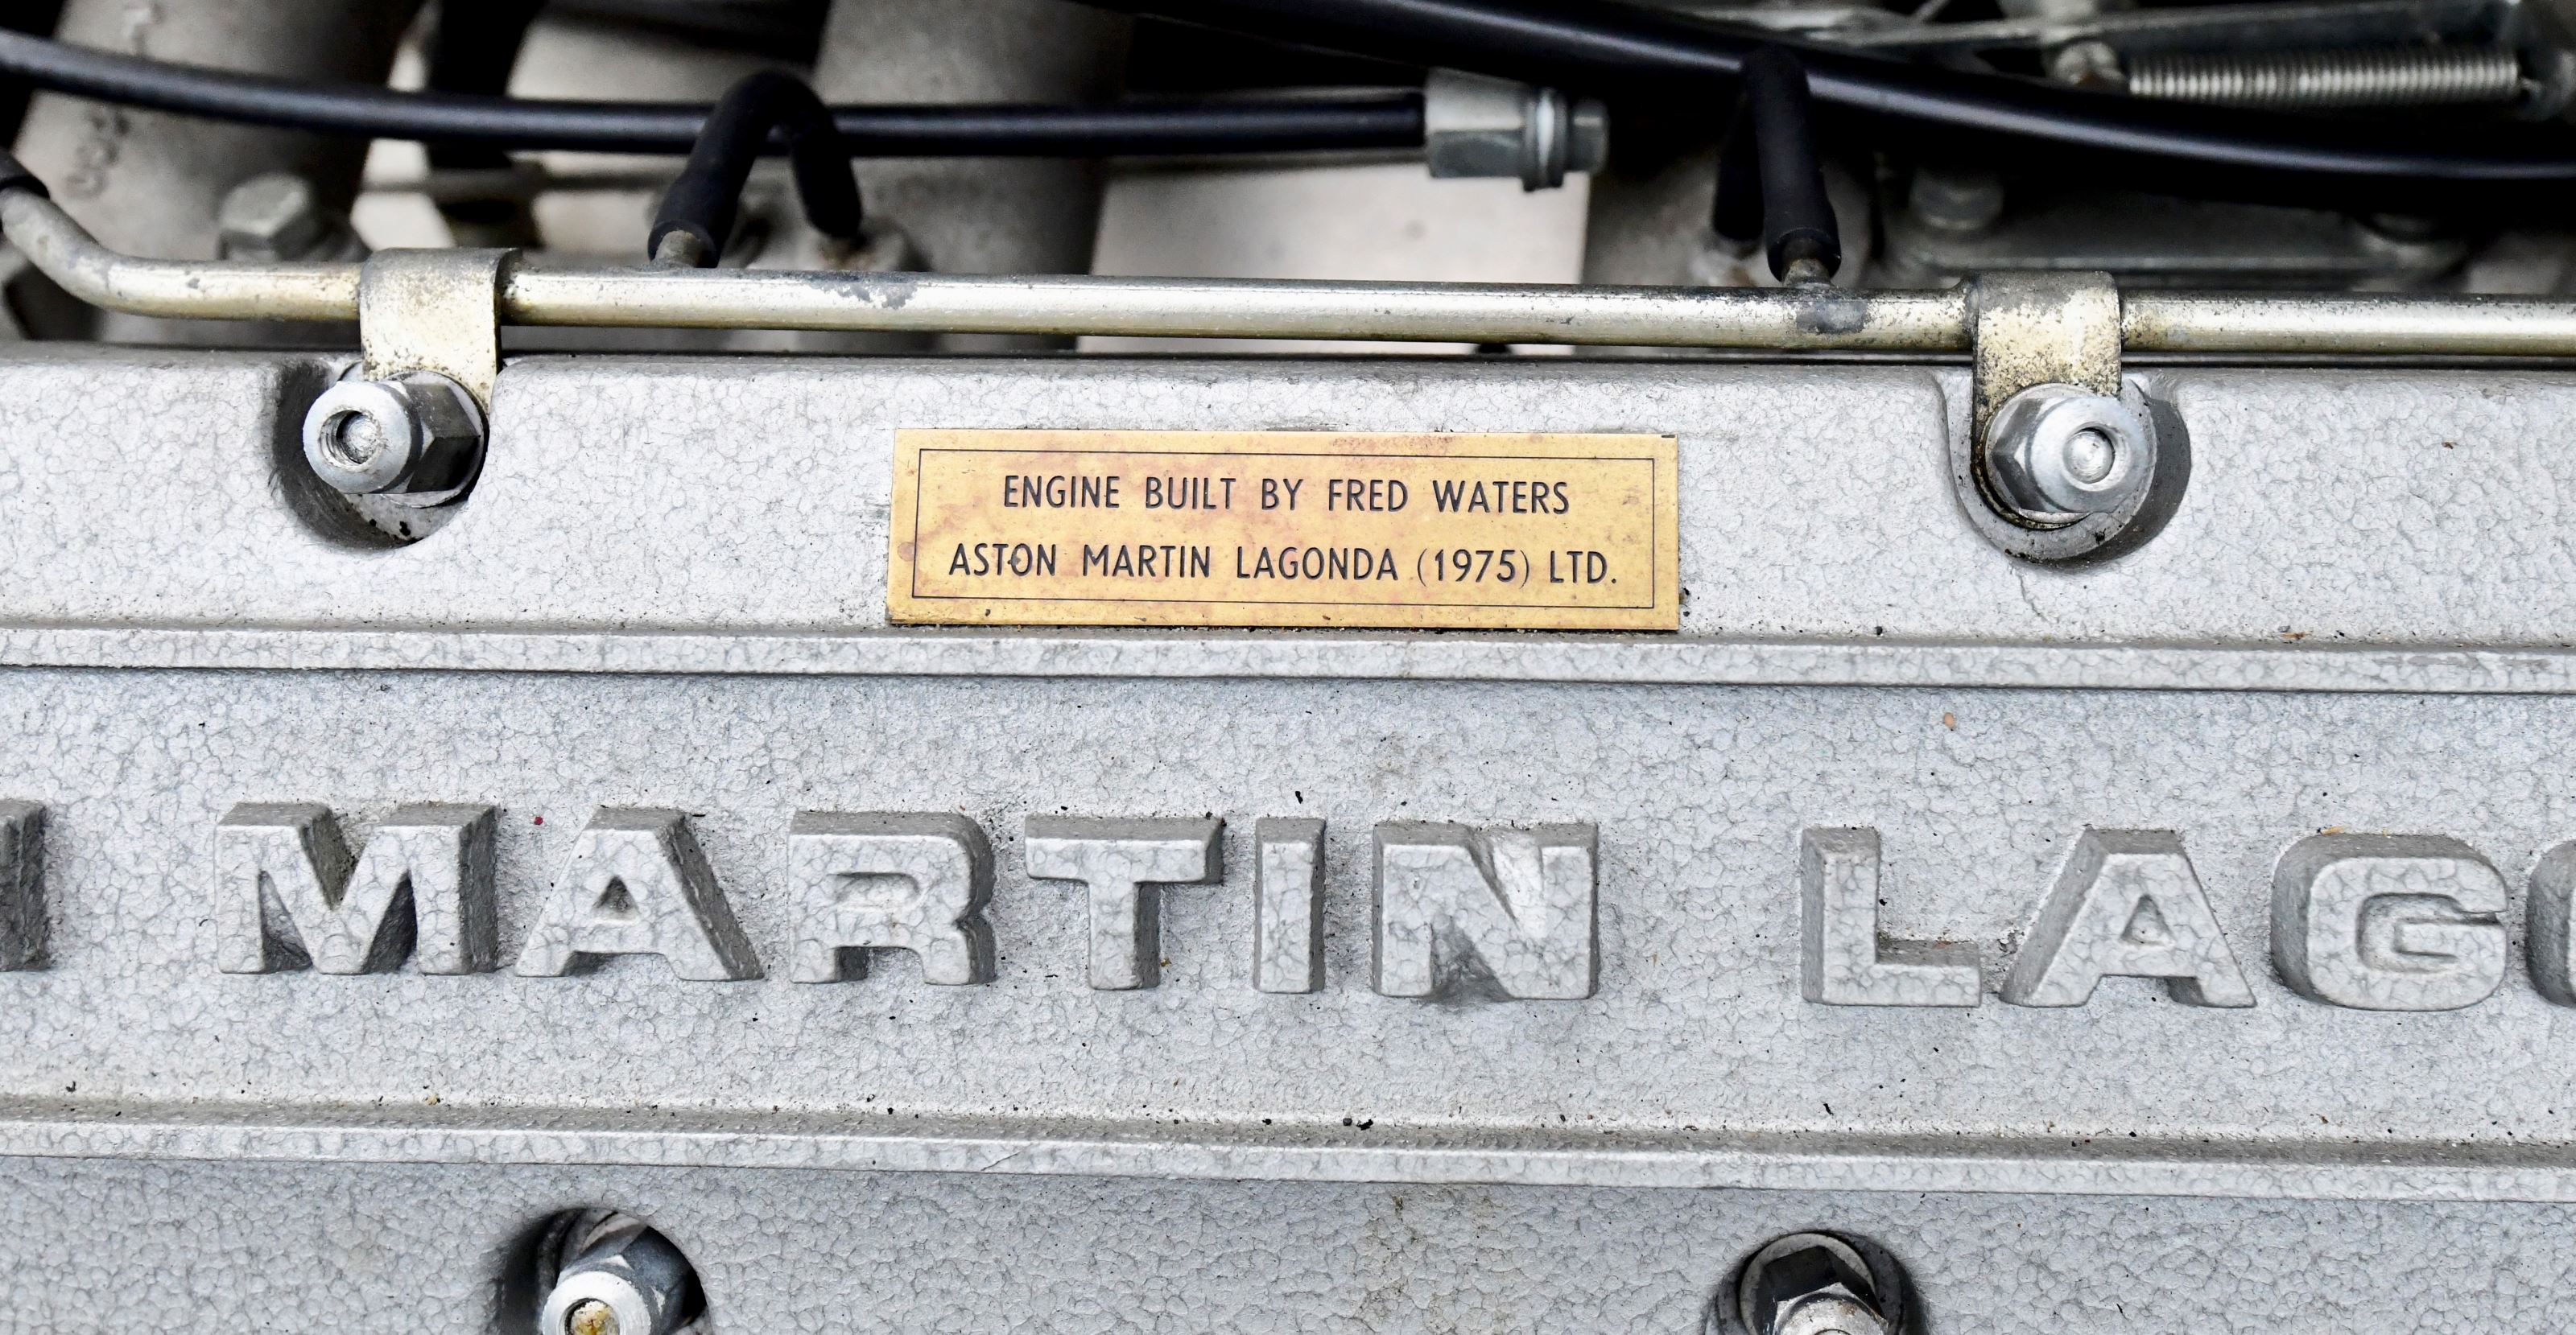 Aston martin v8  volante left hand drive automatic  1gxwgrzzp3shw0fpiuye8